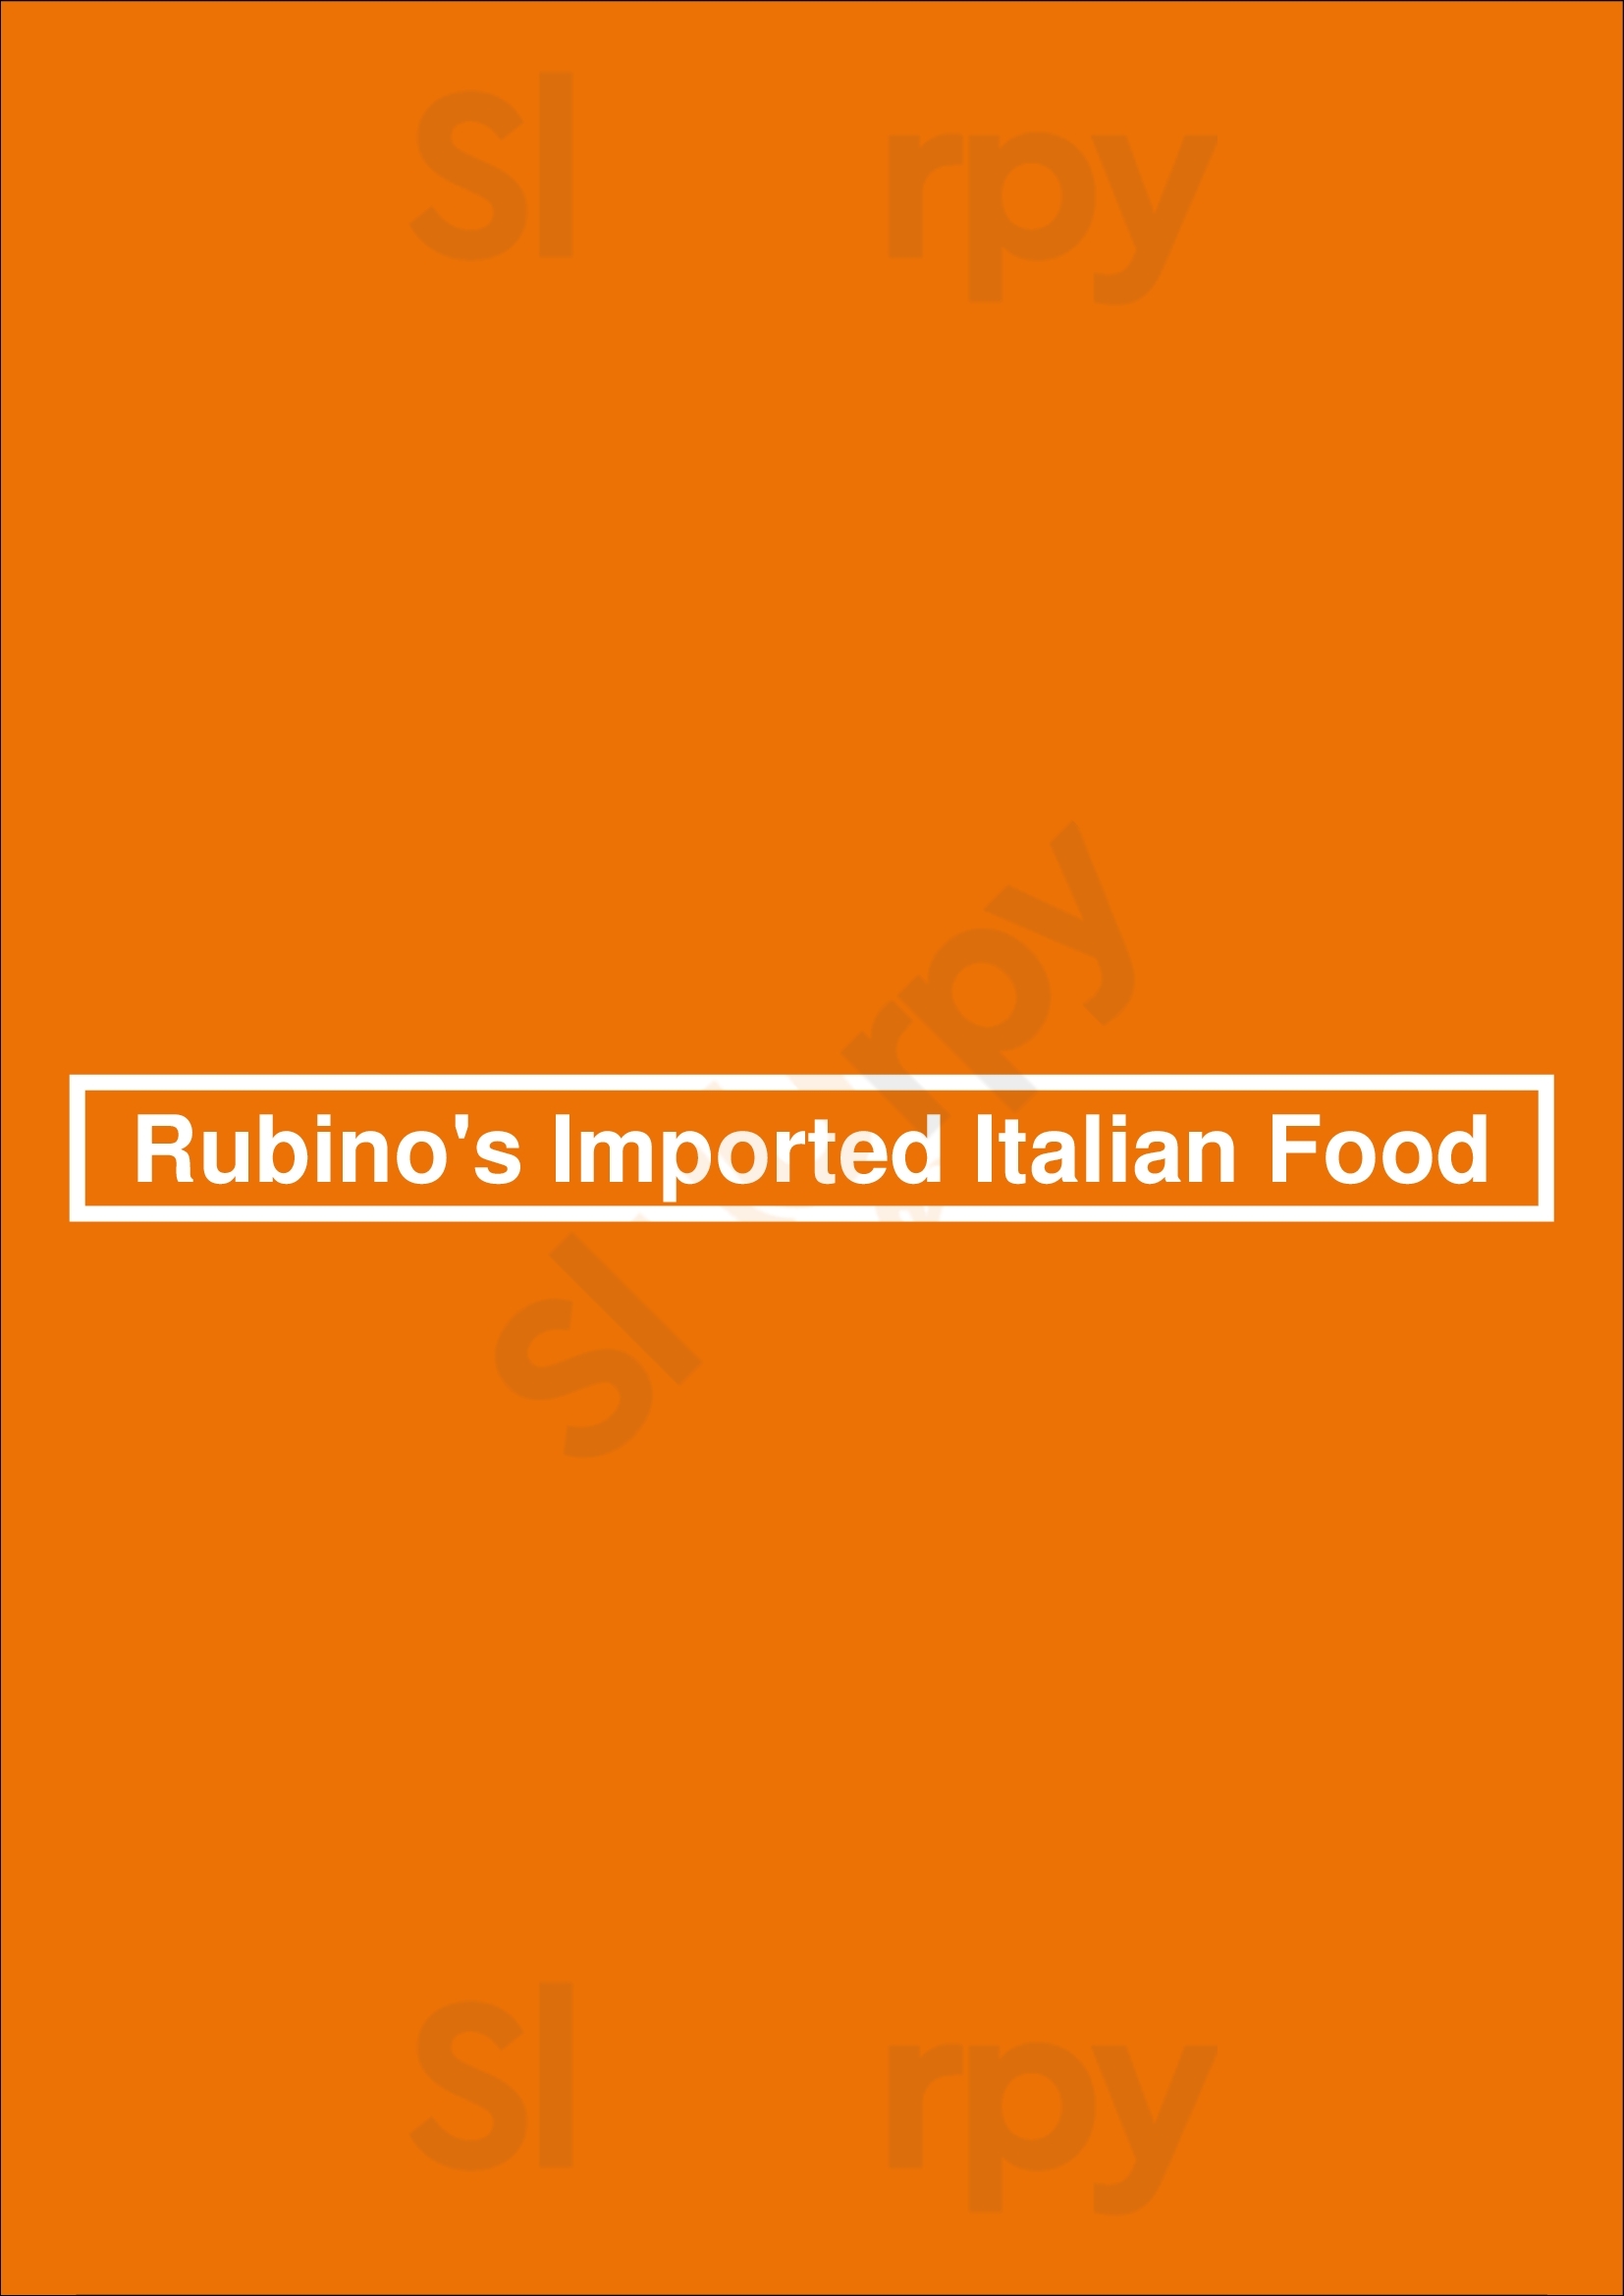 Rubino's Imported Italian Food Rochester Menu - 1